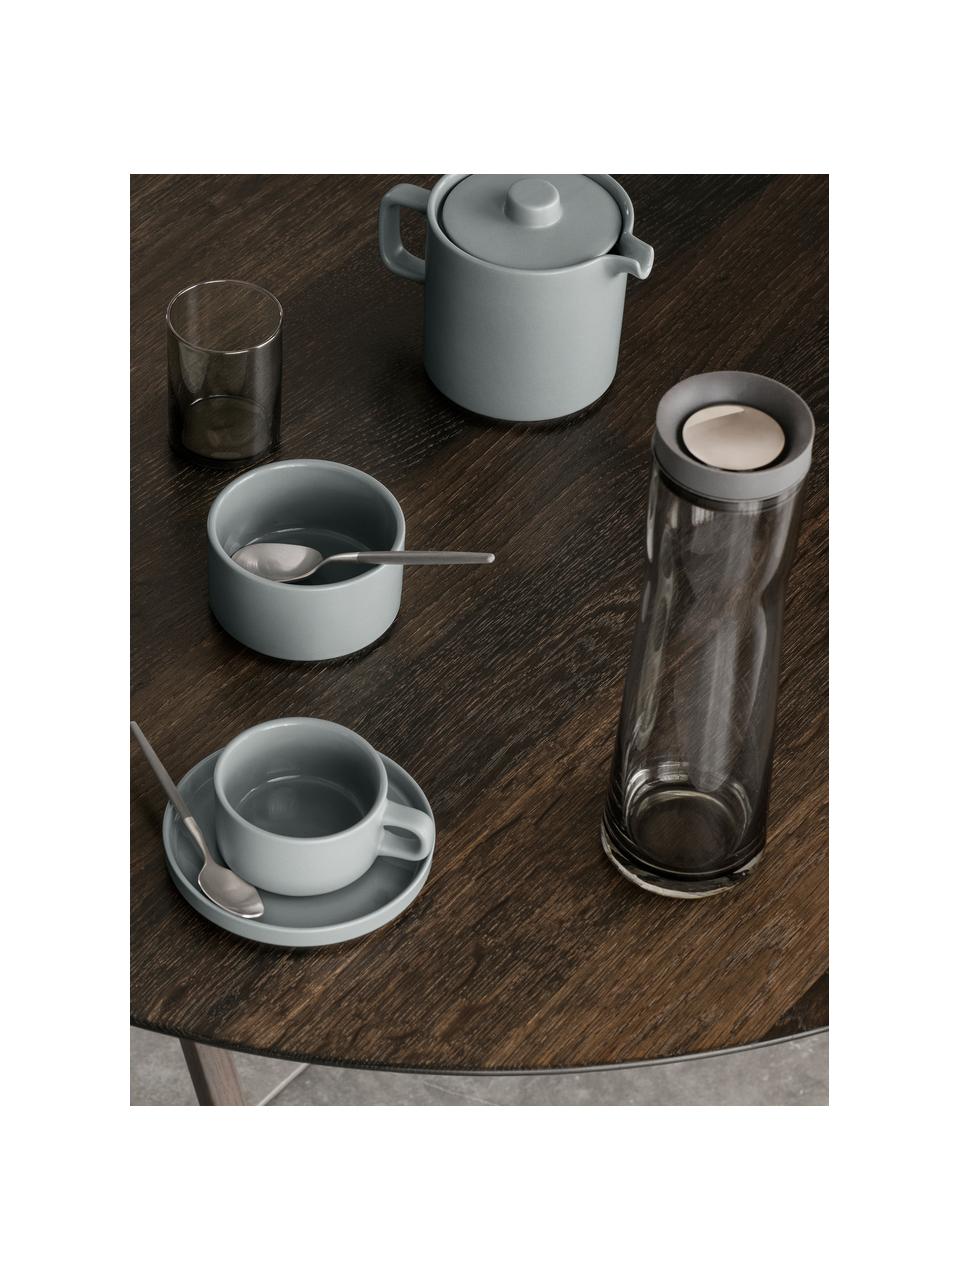 Karaffe Splash in Grau, 1 L, Verschluss: Silikon, Edelstahl, Grau, transparent, H 30 cm